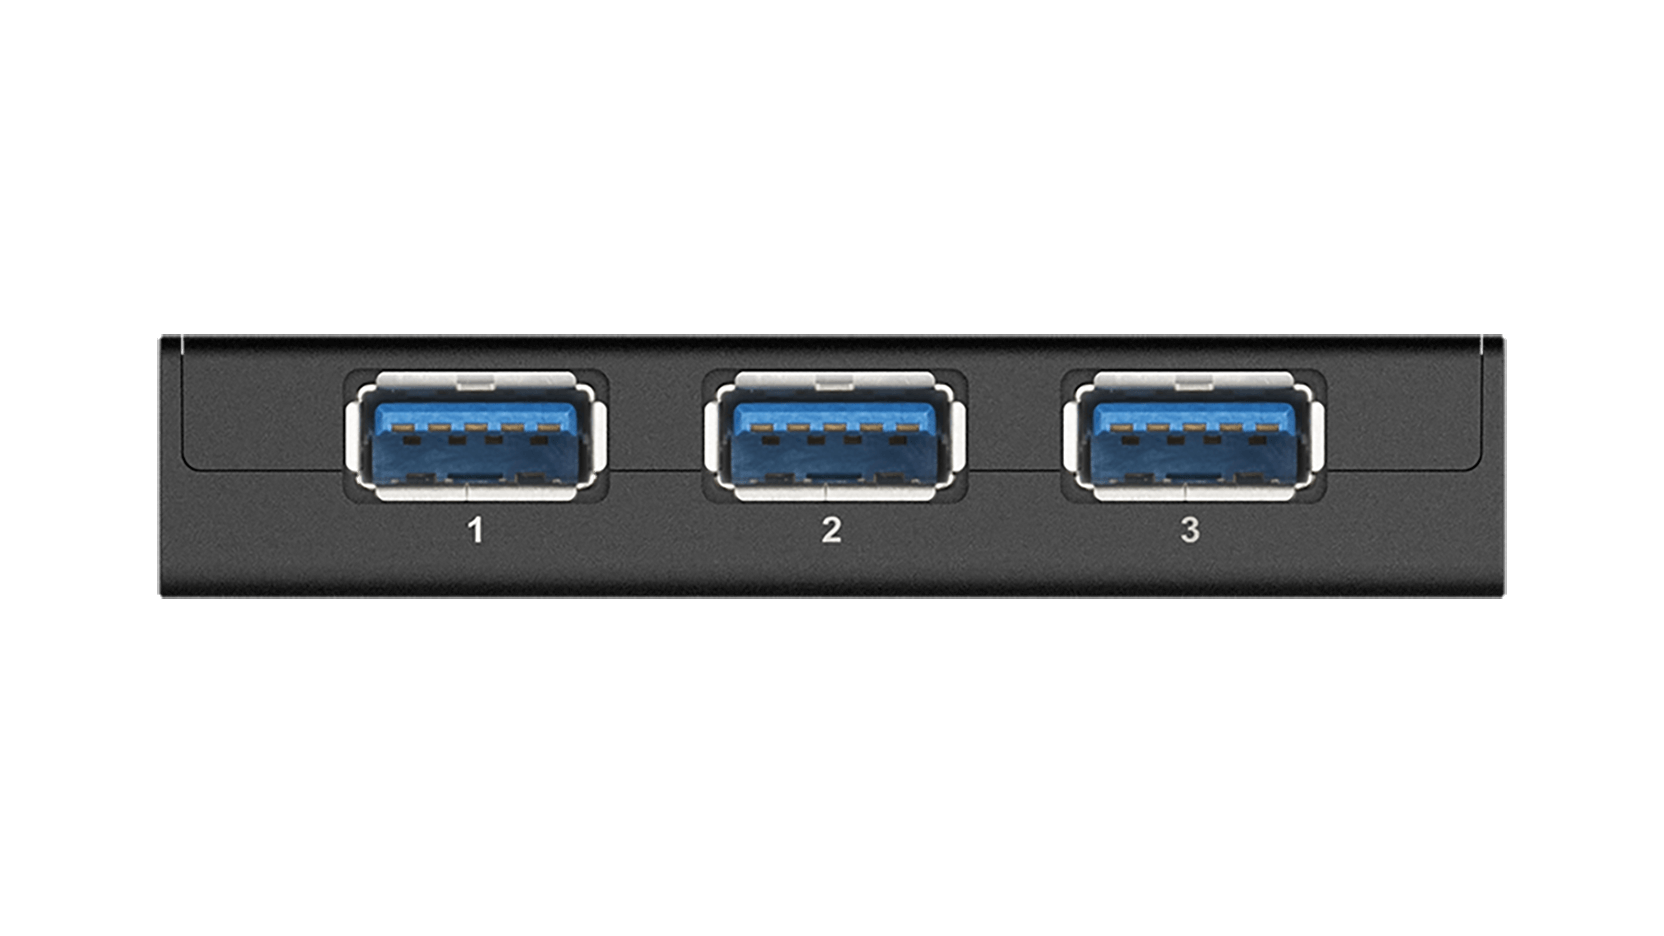 Usb 4 канала. D-link USB 3.0 хаб. Порт юсб 2.0. Порт юсб 3.0. USB Hub d link.